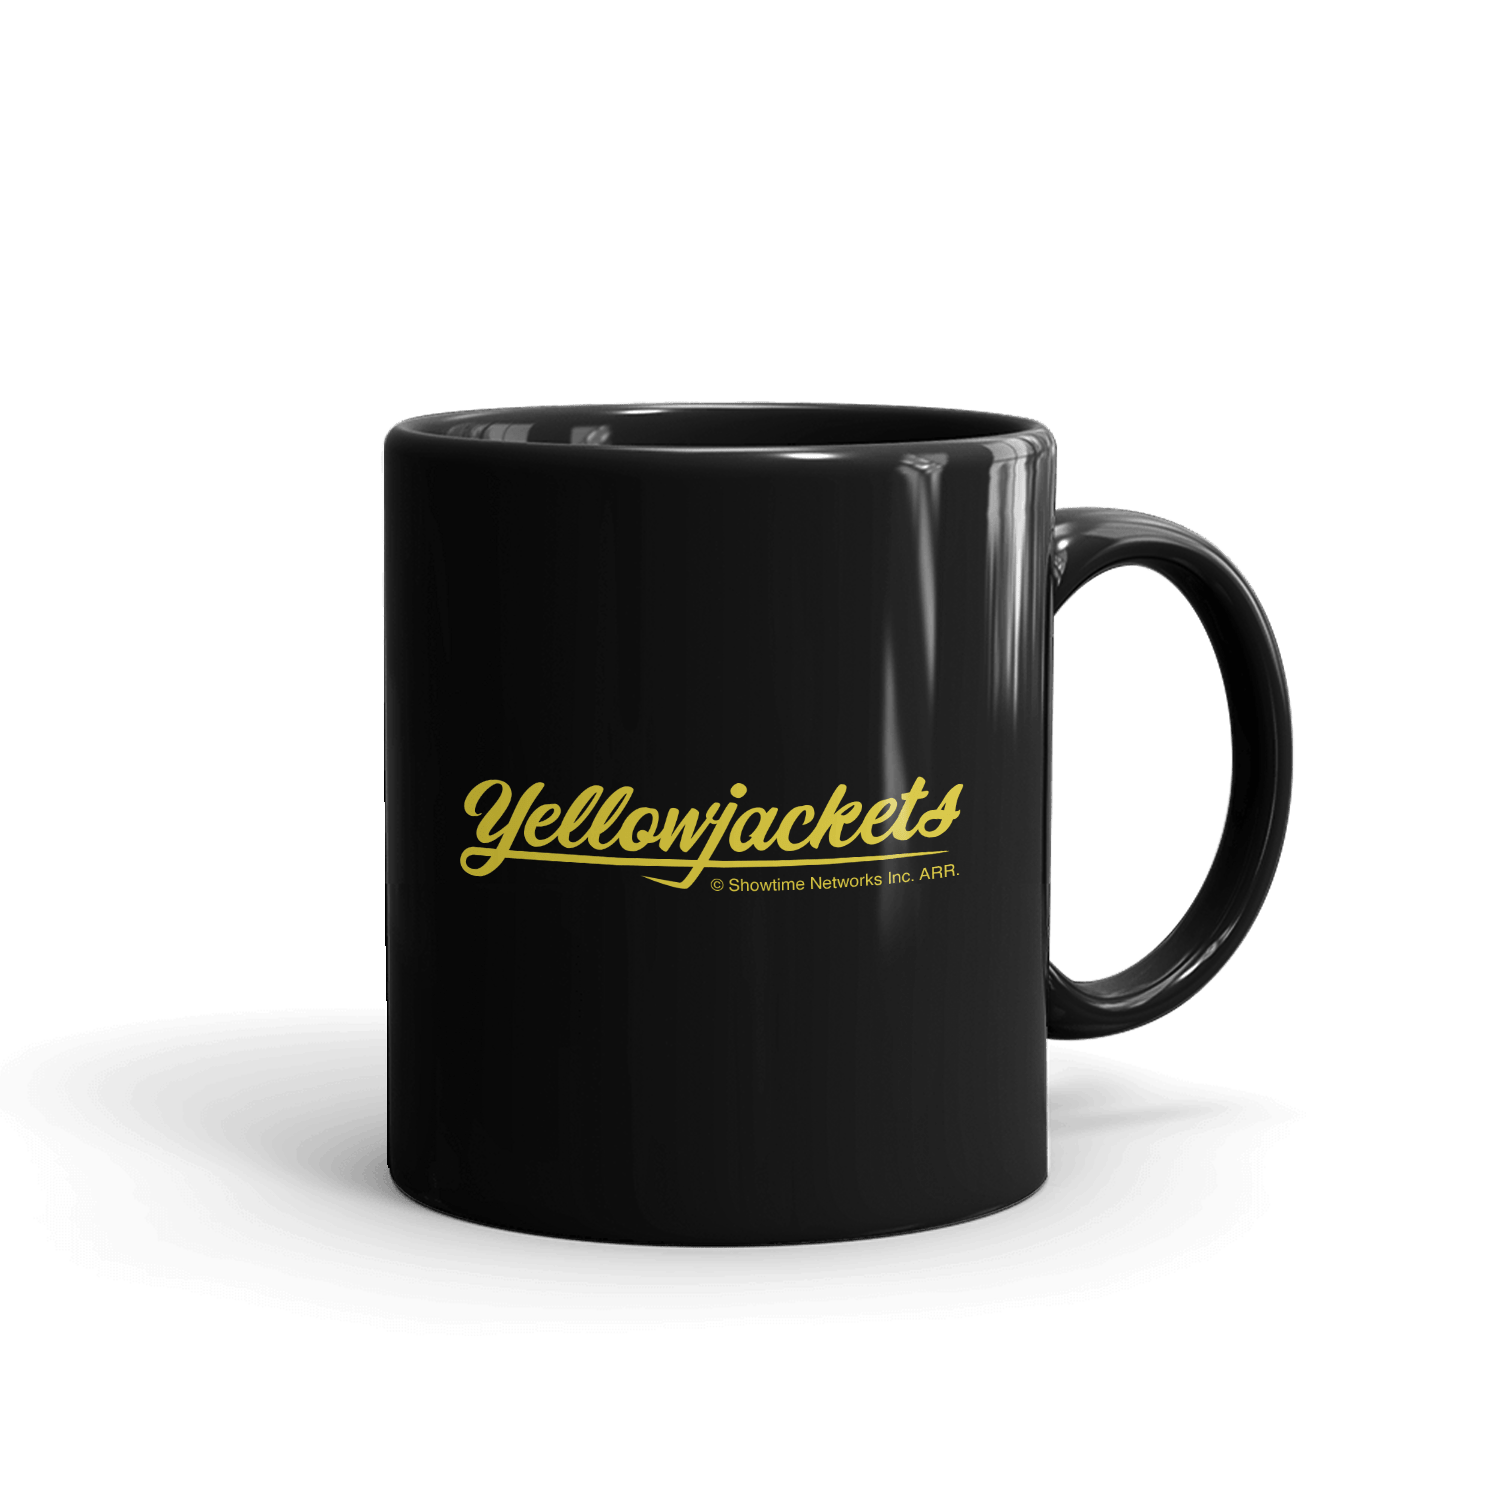 Yellowjackets Care Assistant Black Mug - Paramount Shop